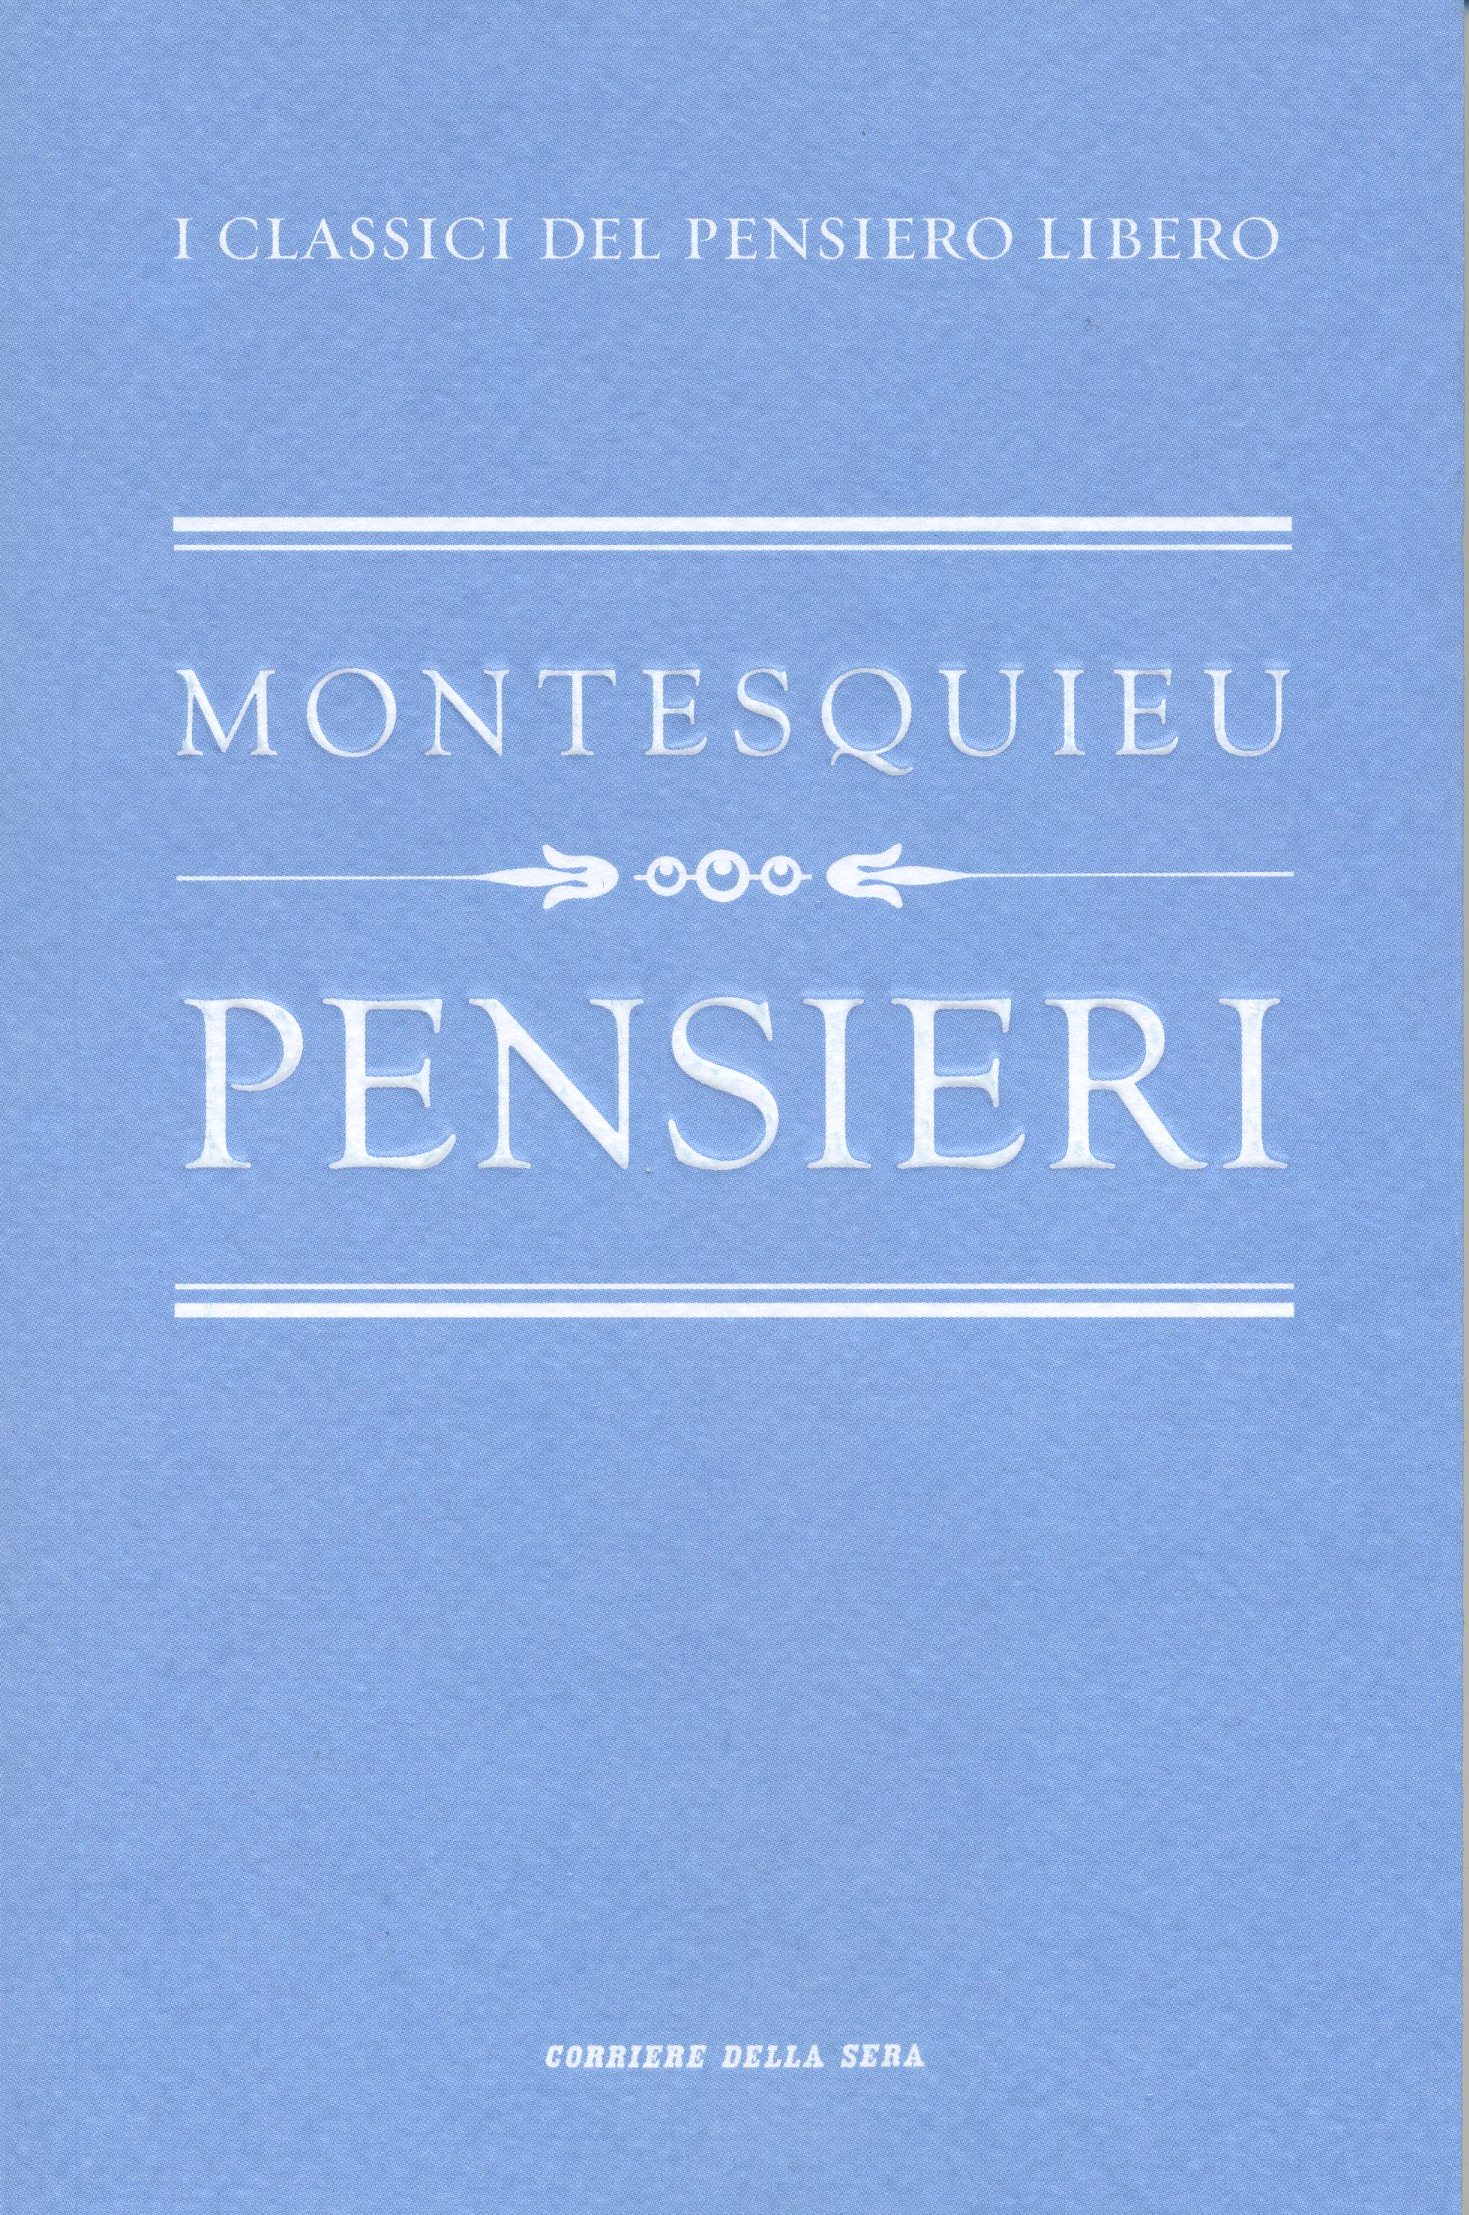 More about Pensieri